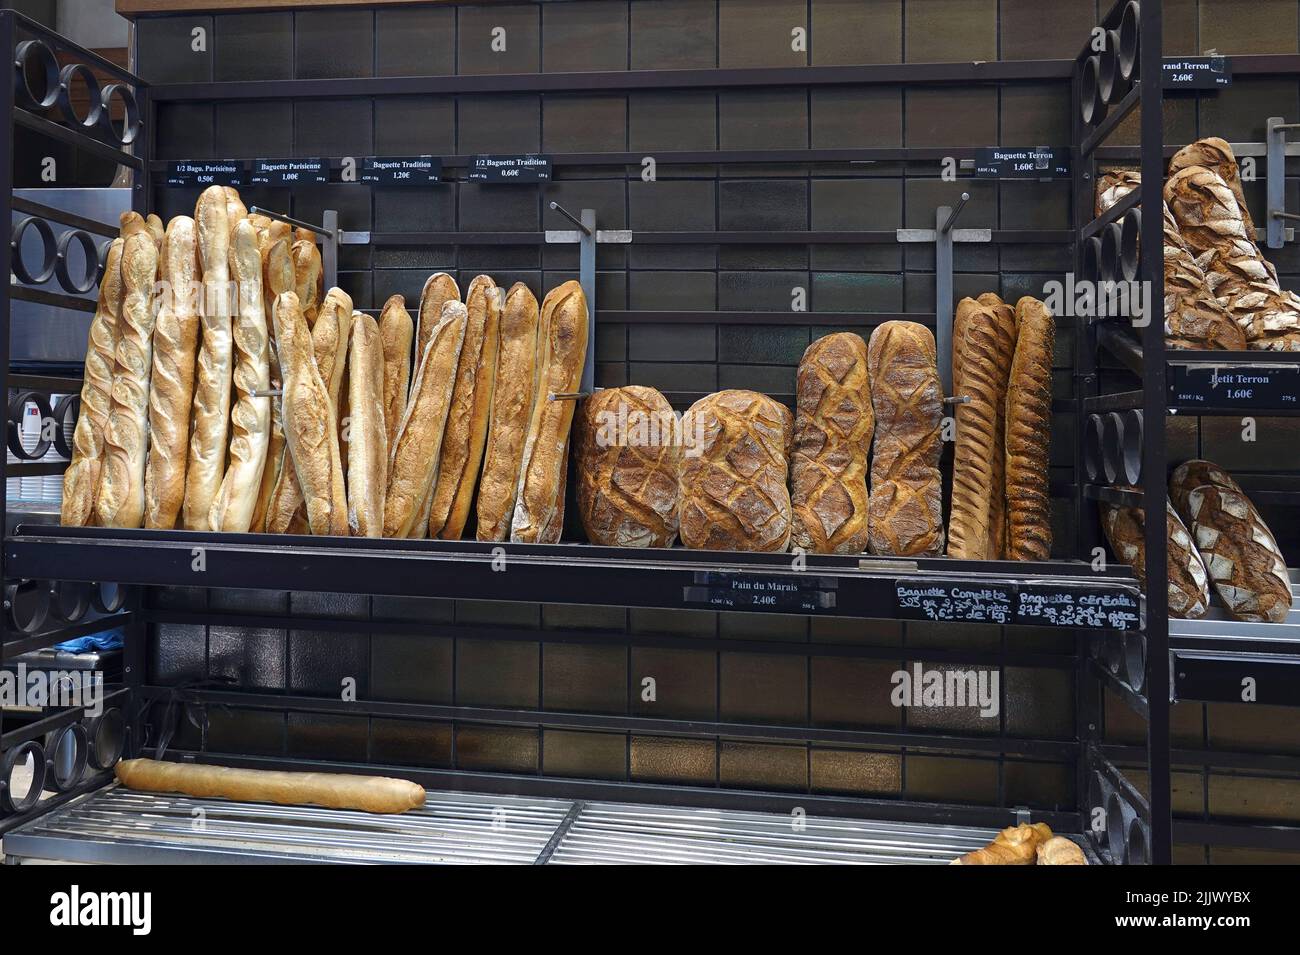 Francia, París, baguettes frescas a la venta en una boulangerie Foto © Fabio Mazzarella/Sintesi/Alamy Stock Photo Foto de stock